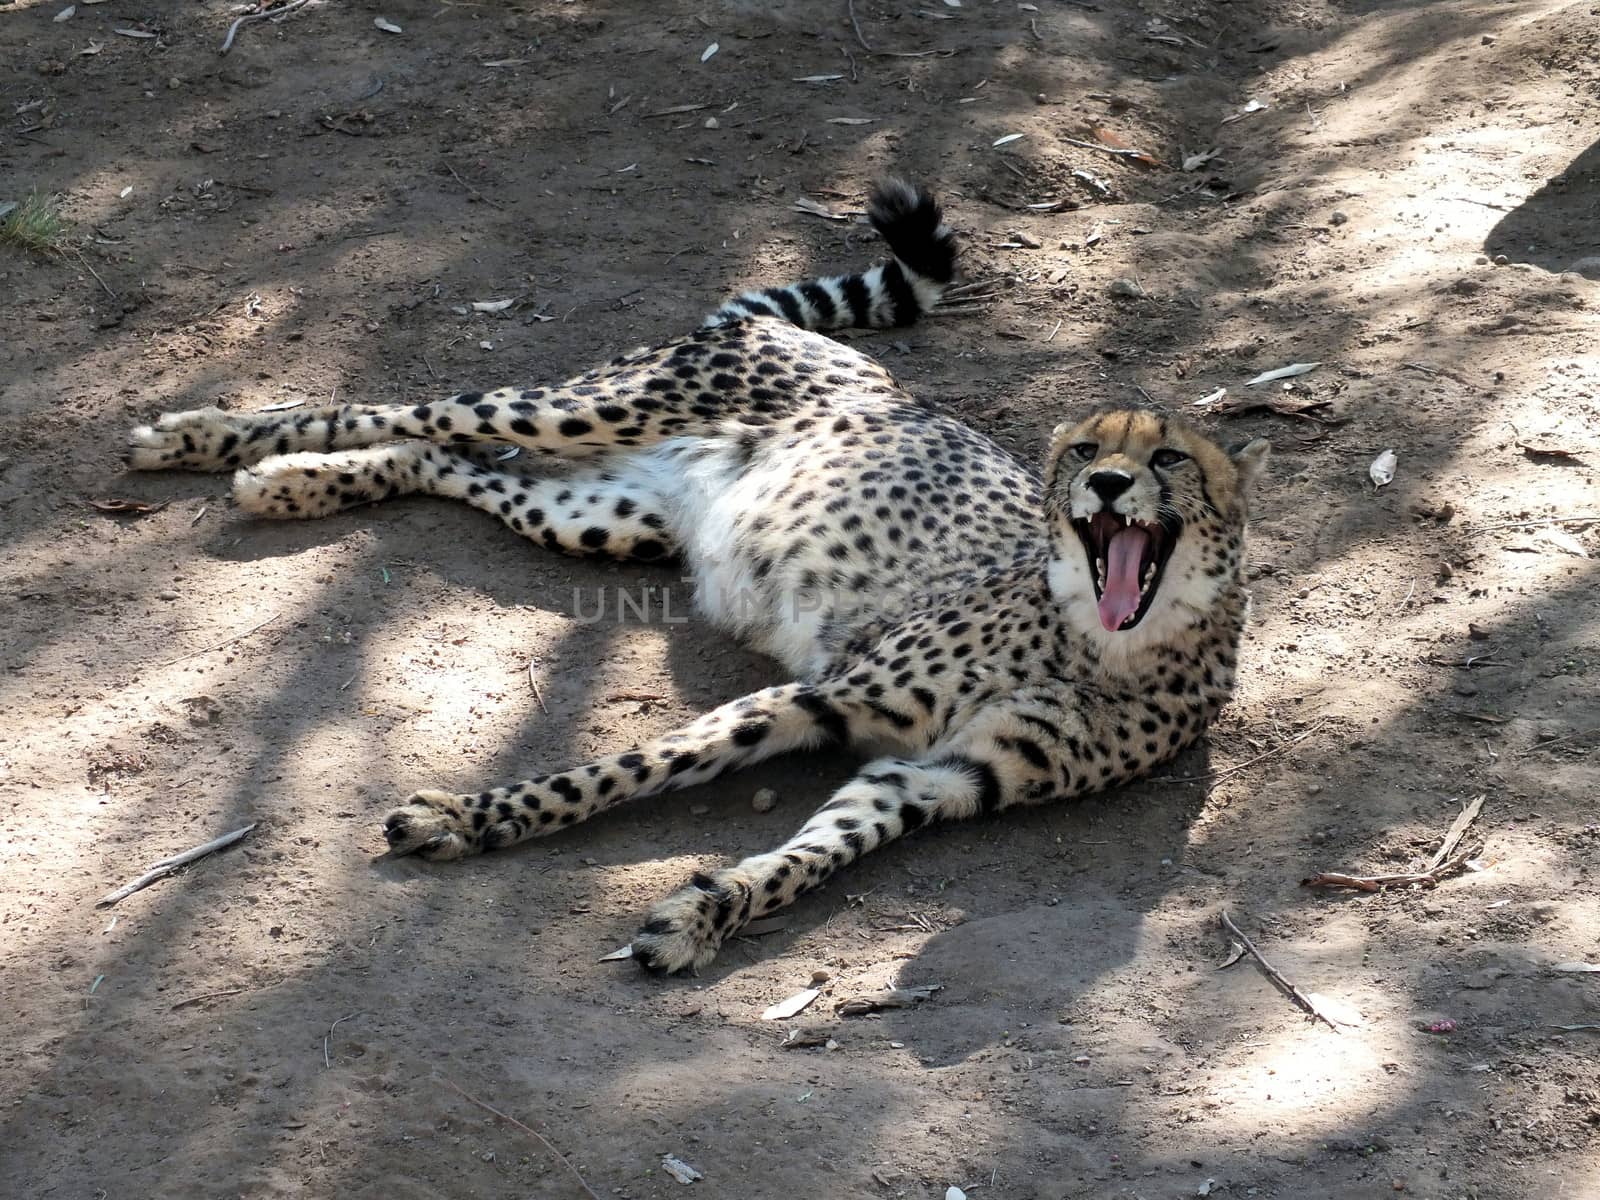 Cheetah by glynspencer